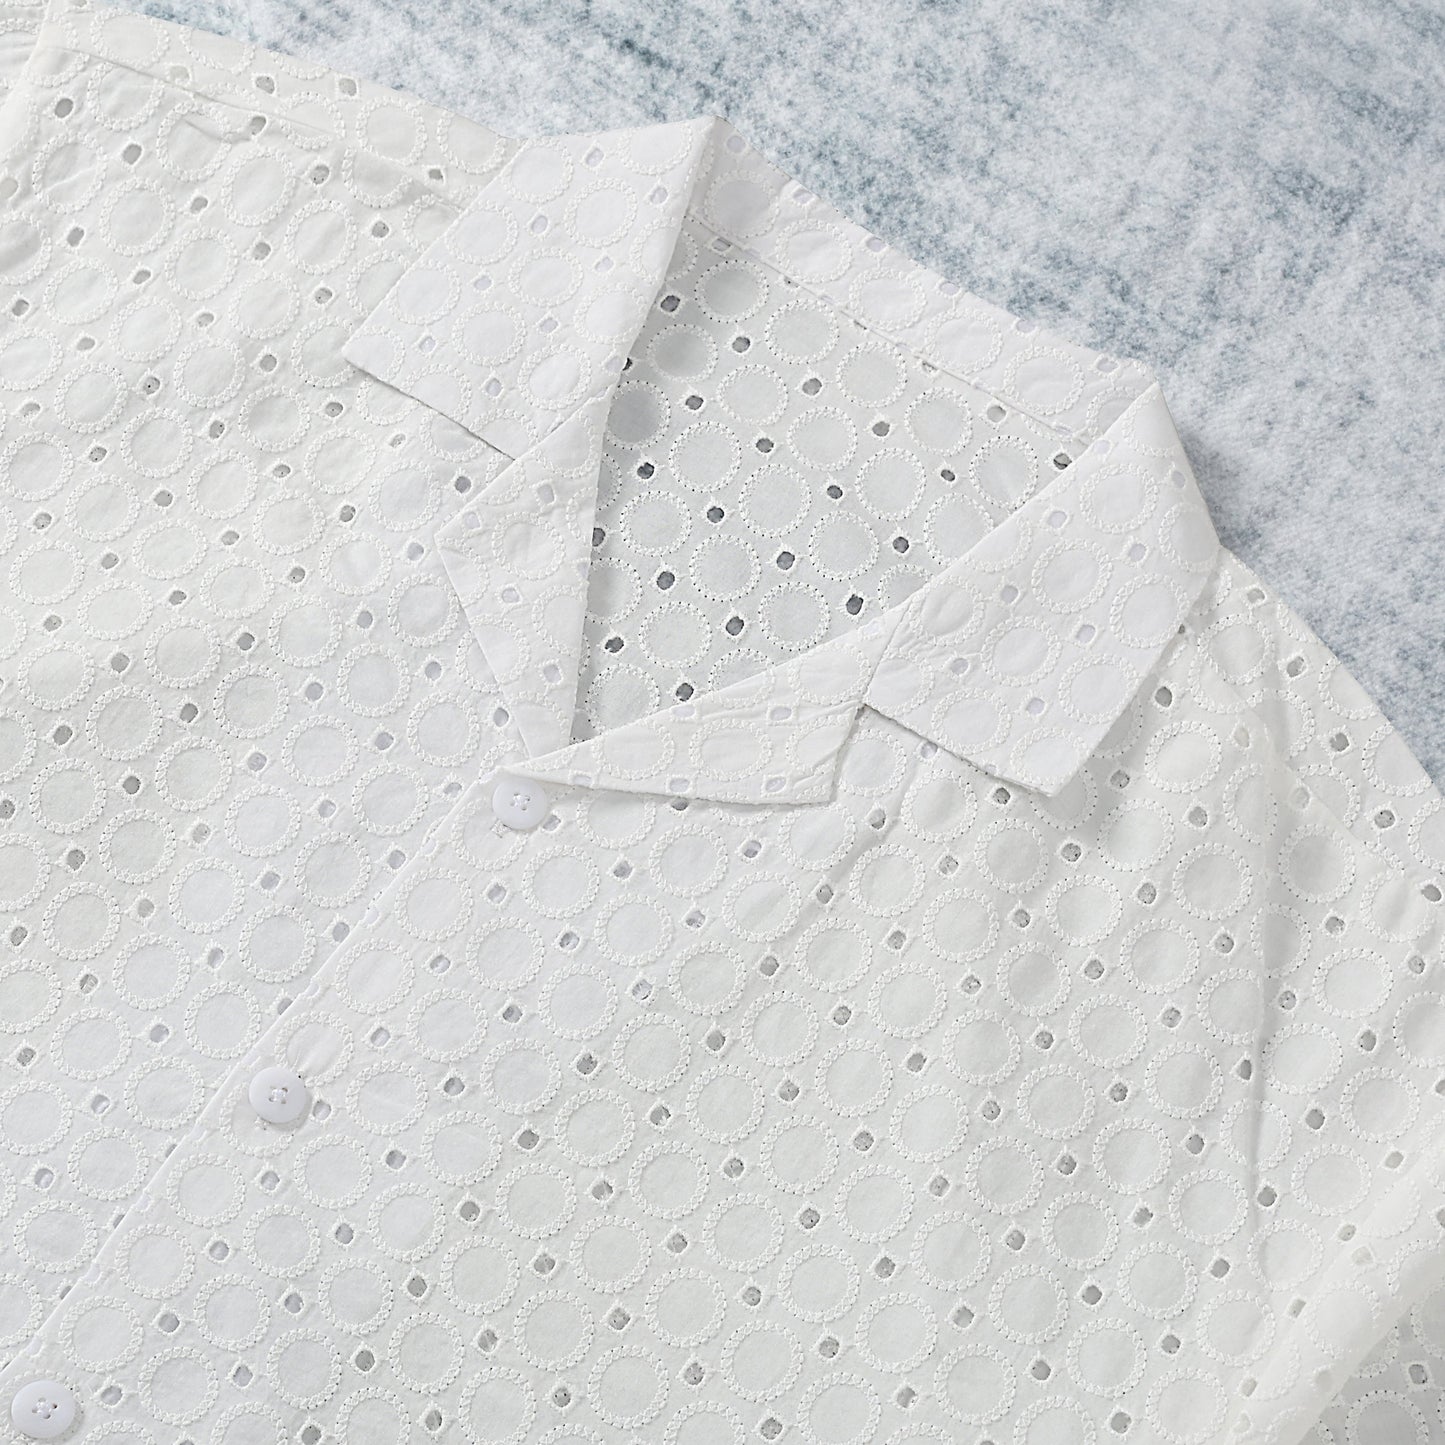 Circle Embroidered Openwork Textured Camp Collar Short Sleeve Shirt